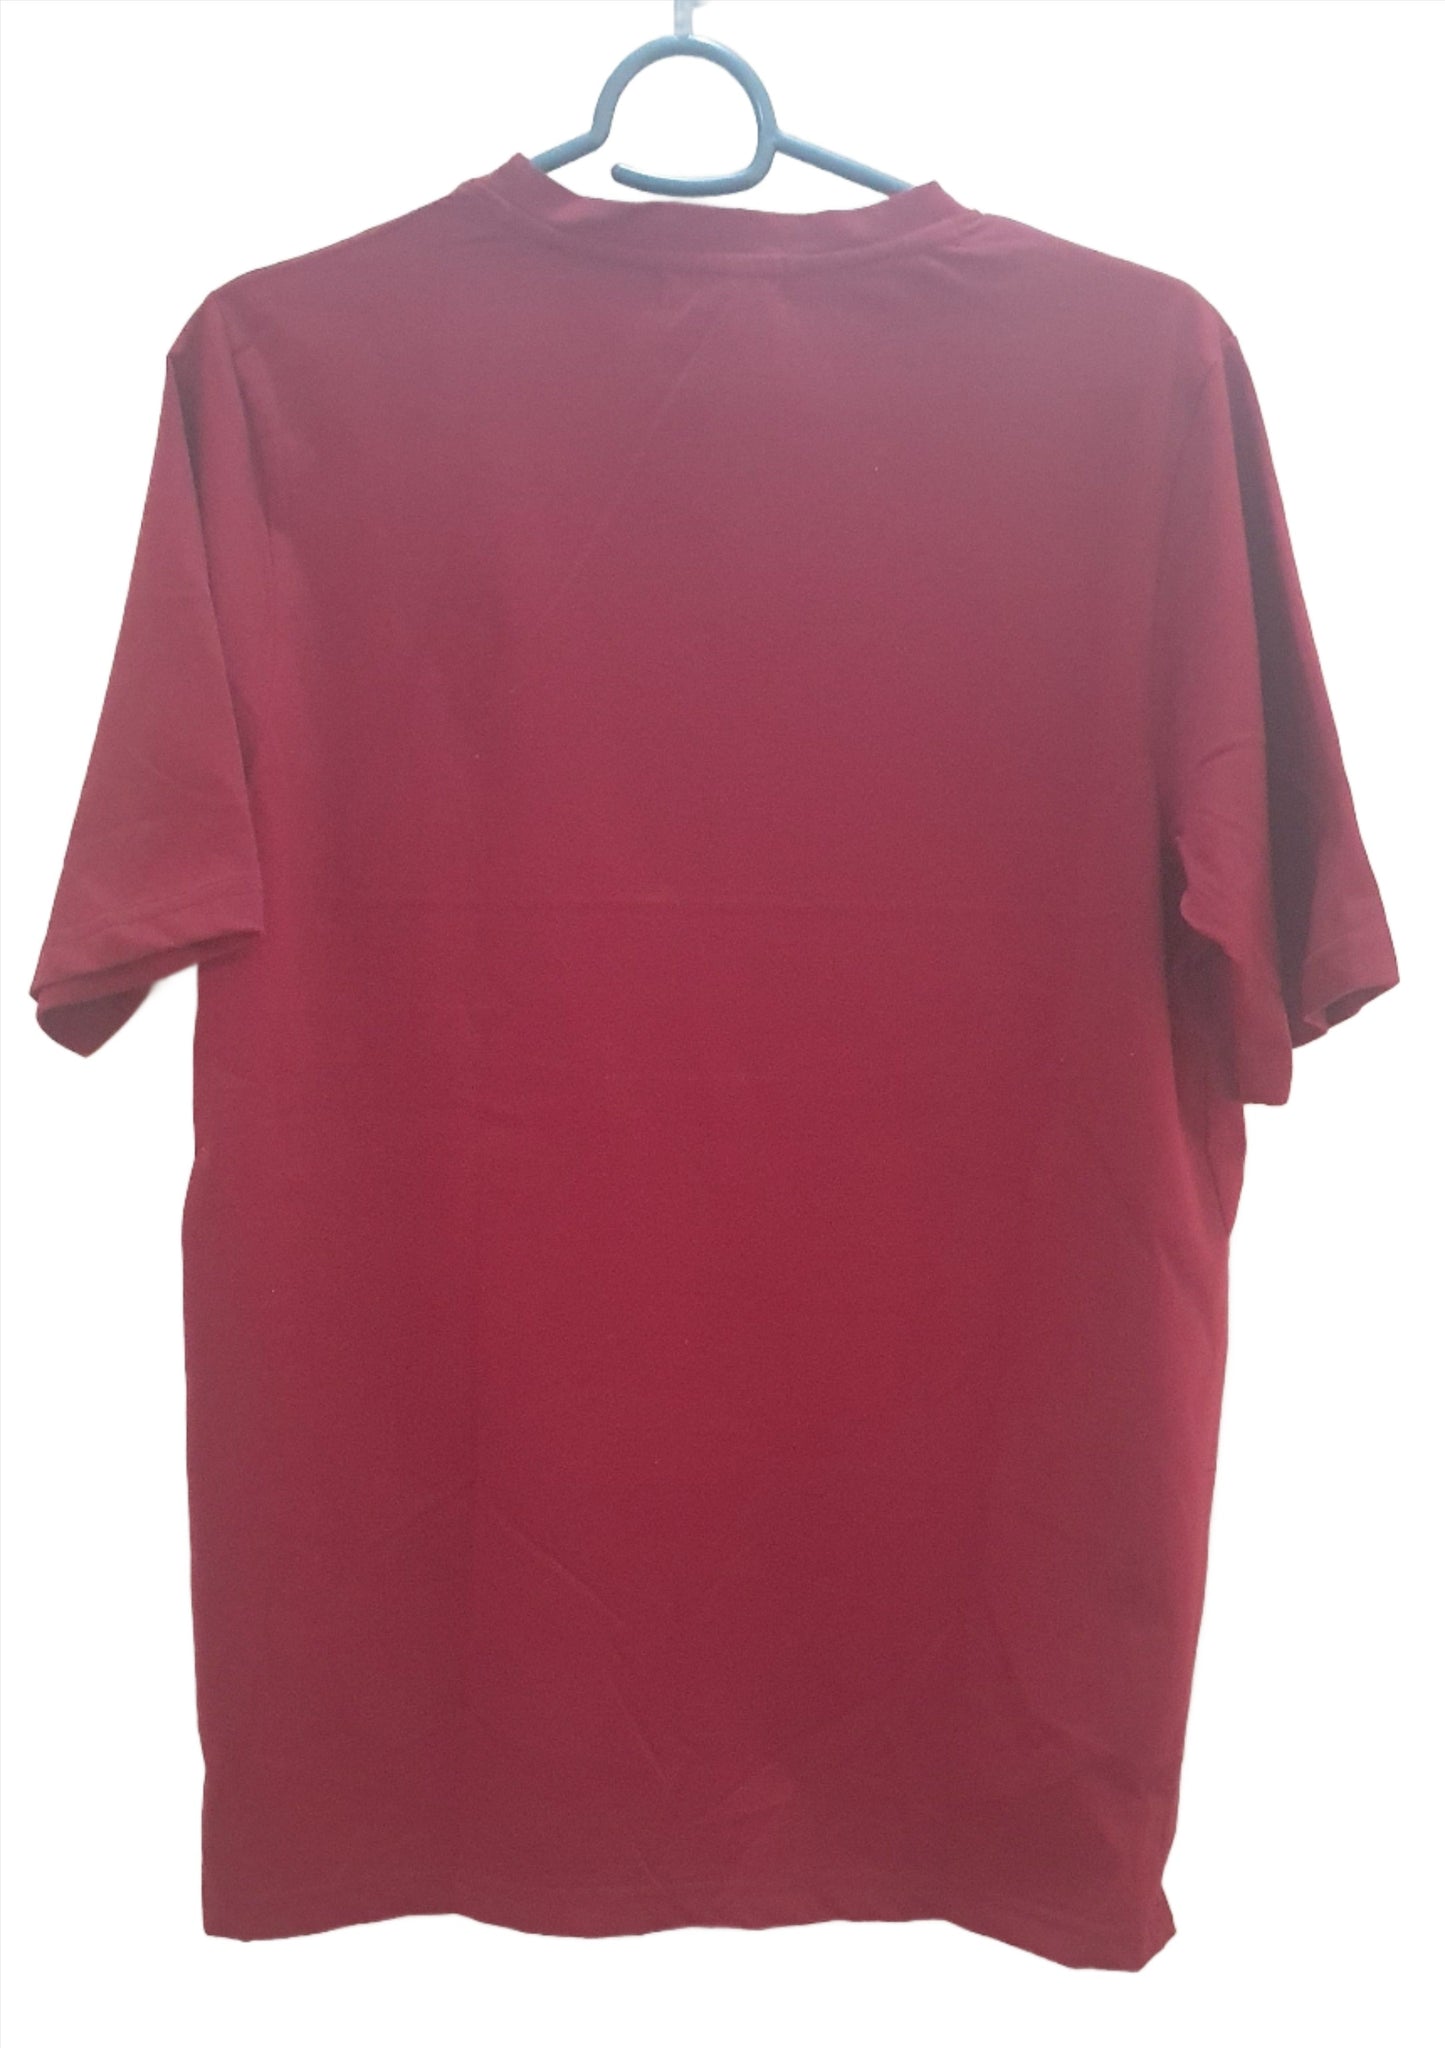 Red Colour Cotton Tshirt